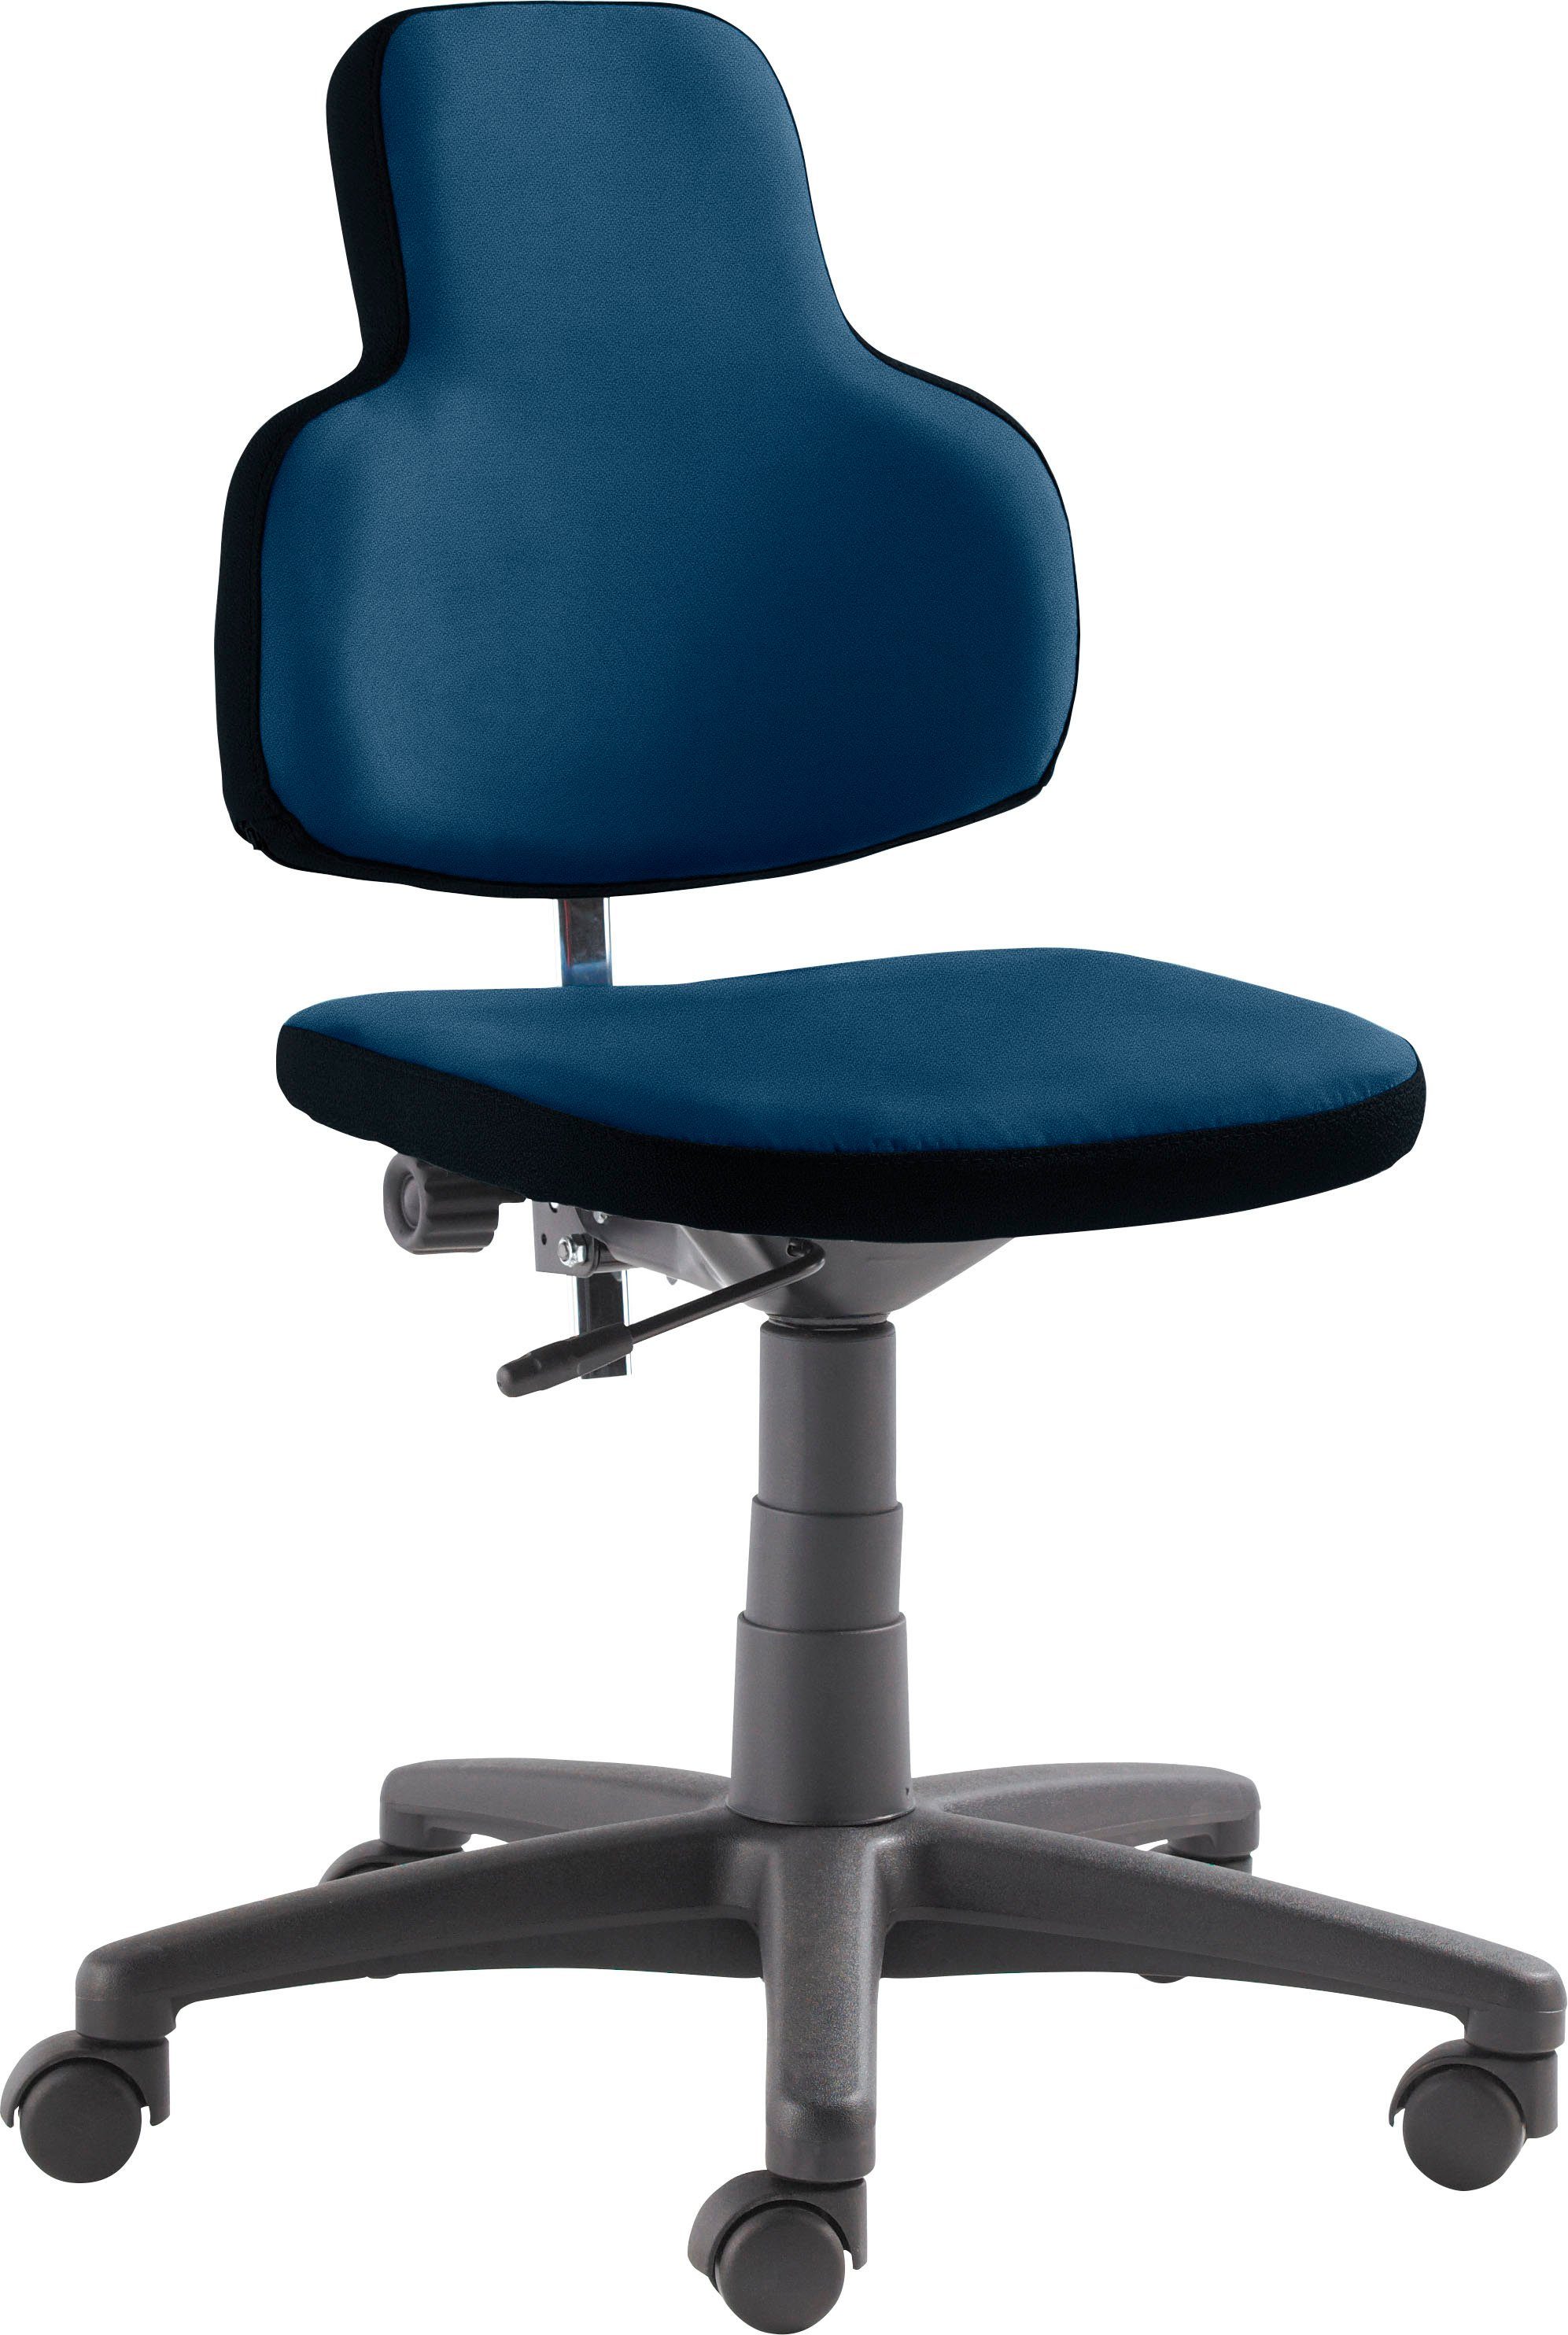 myONE, Dunkelblau mitwachsend Sitzmöbel Mayer Kinderdrehstuhl dunkelblau/schwarz | Bürostuhl